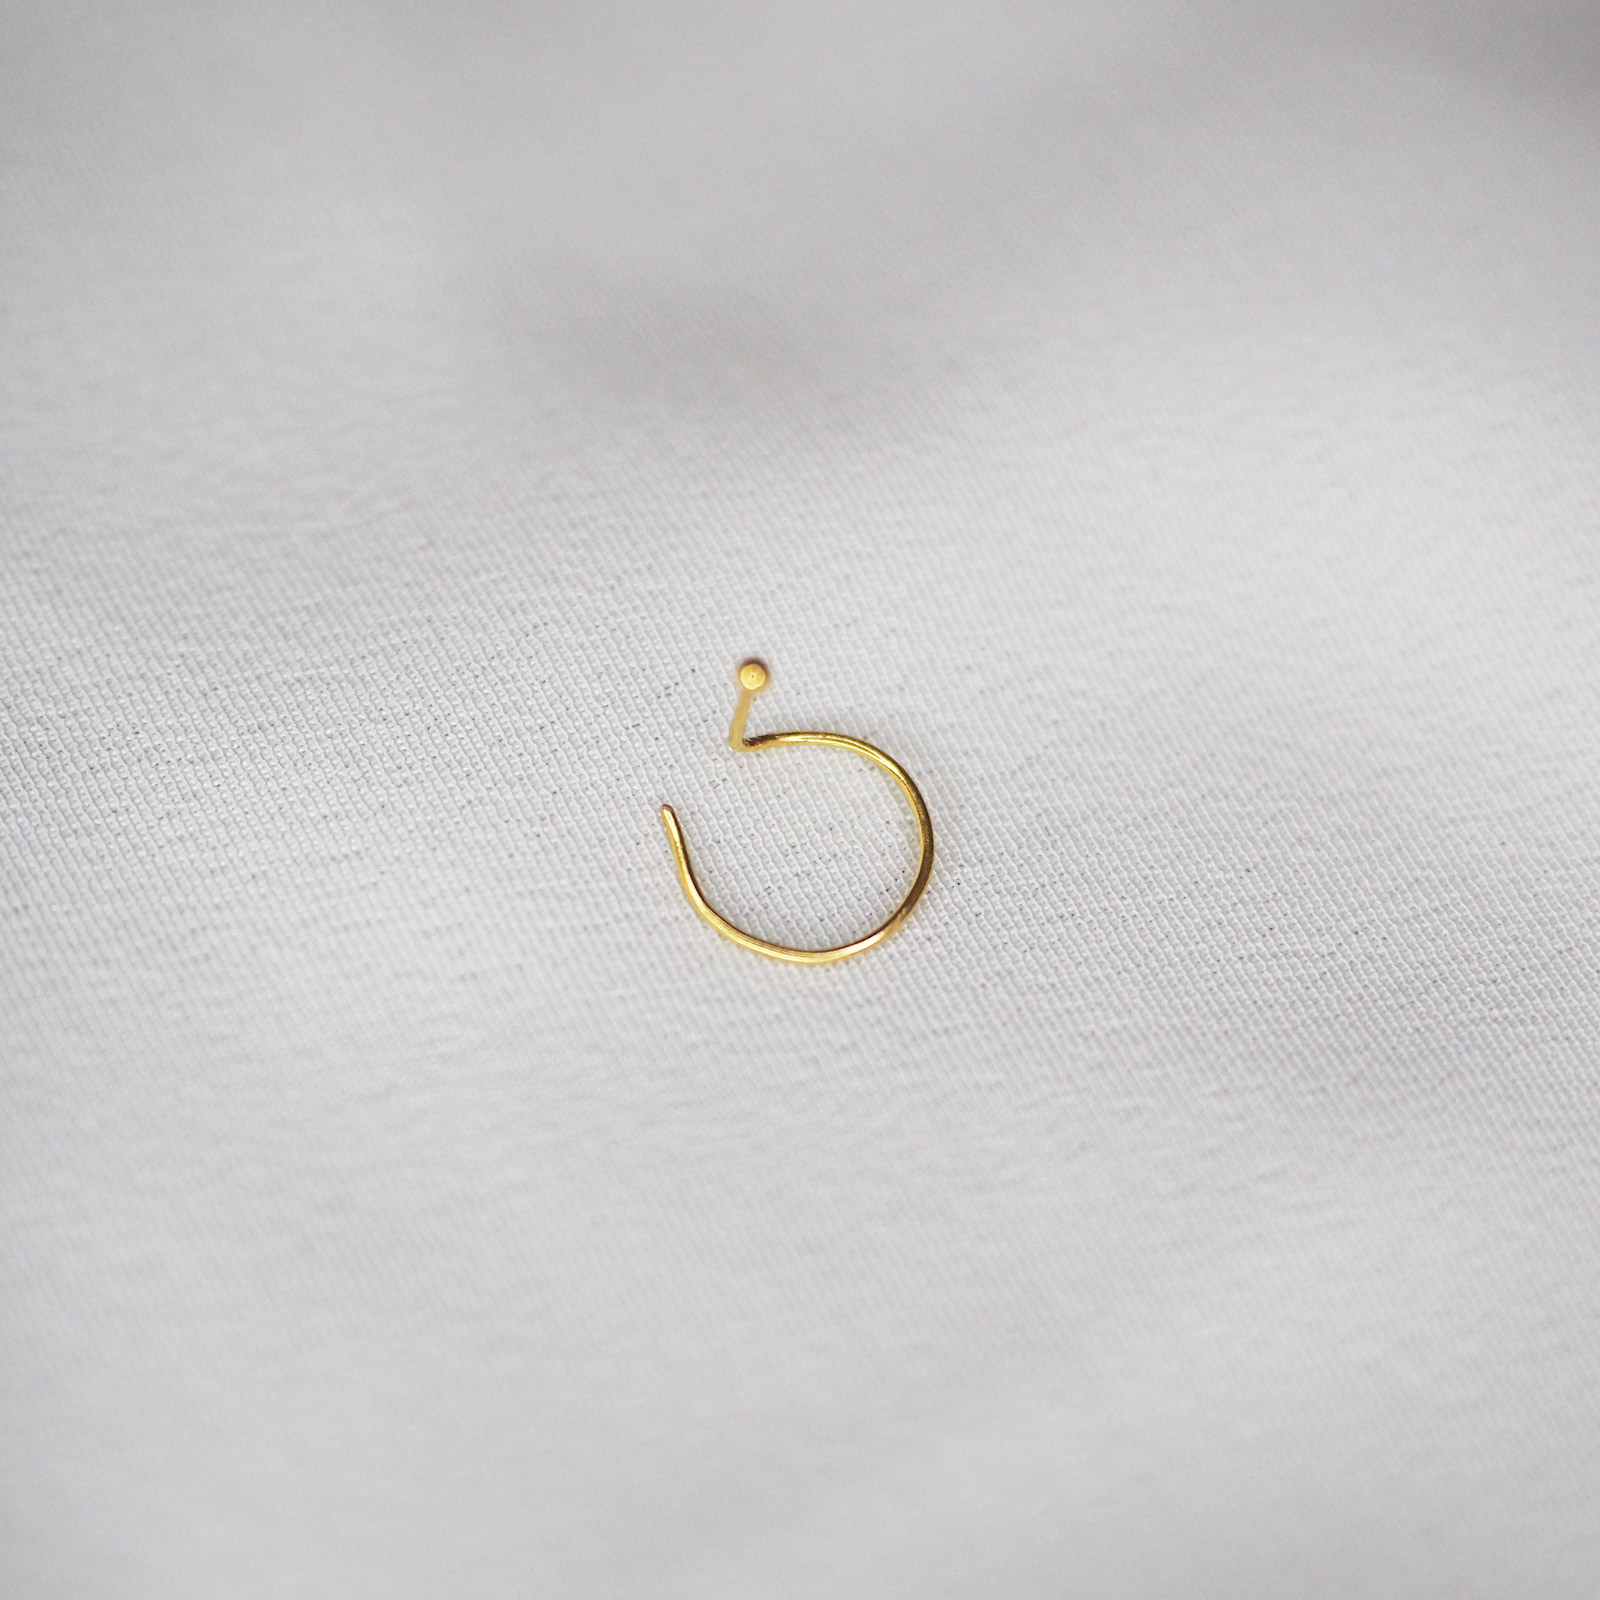 Simple Nose Ring, No Hinge Design, 20ga, 5, 6, 7, 8, 9, 10mm, 14k Gold  Filled, Silver, SHEMISLI SH285, SH286, SH287, SH288, SH289, SH290 - Etsy